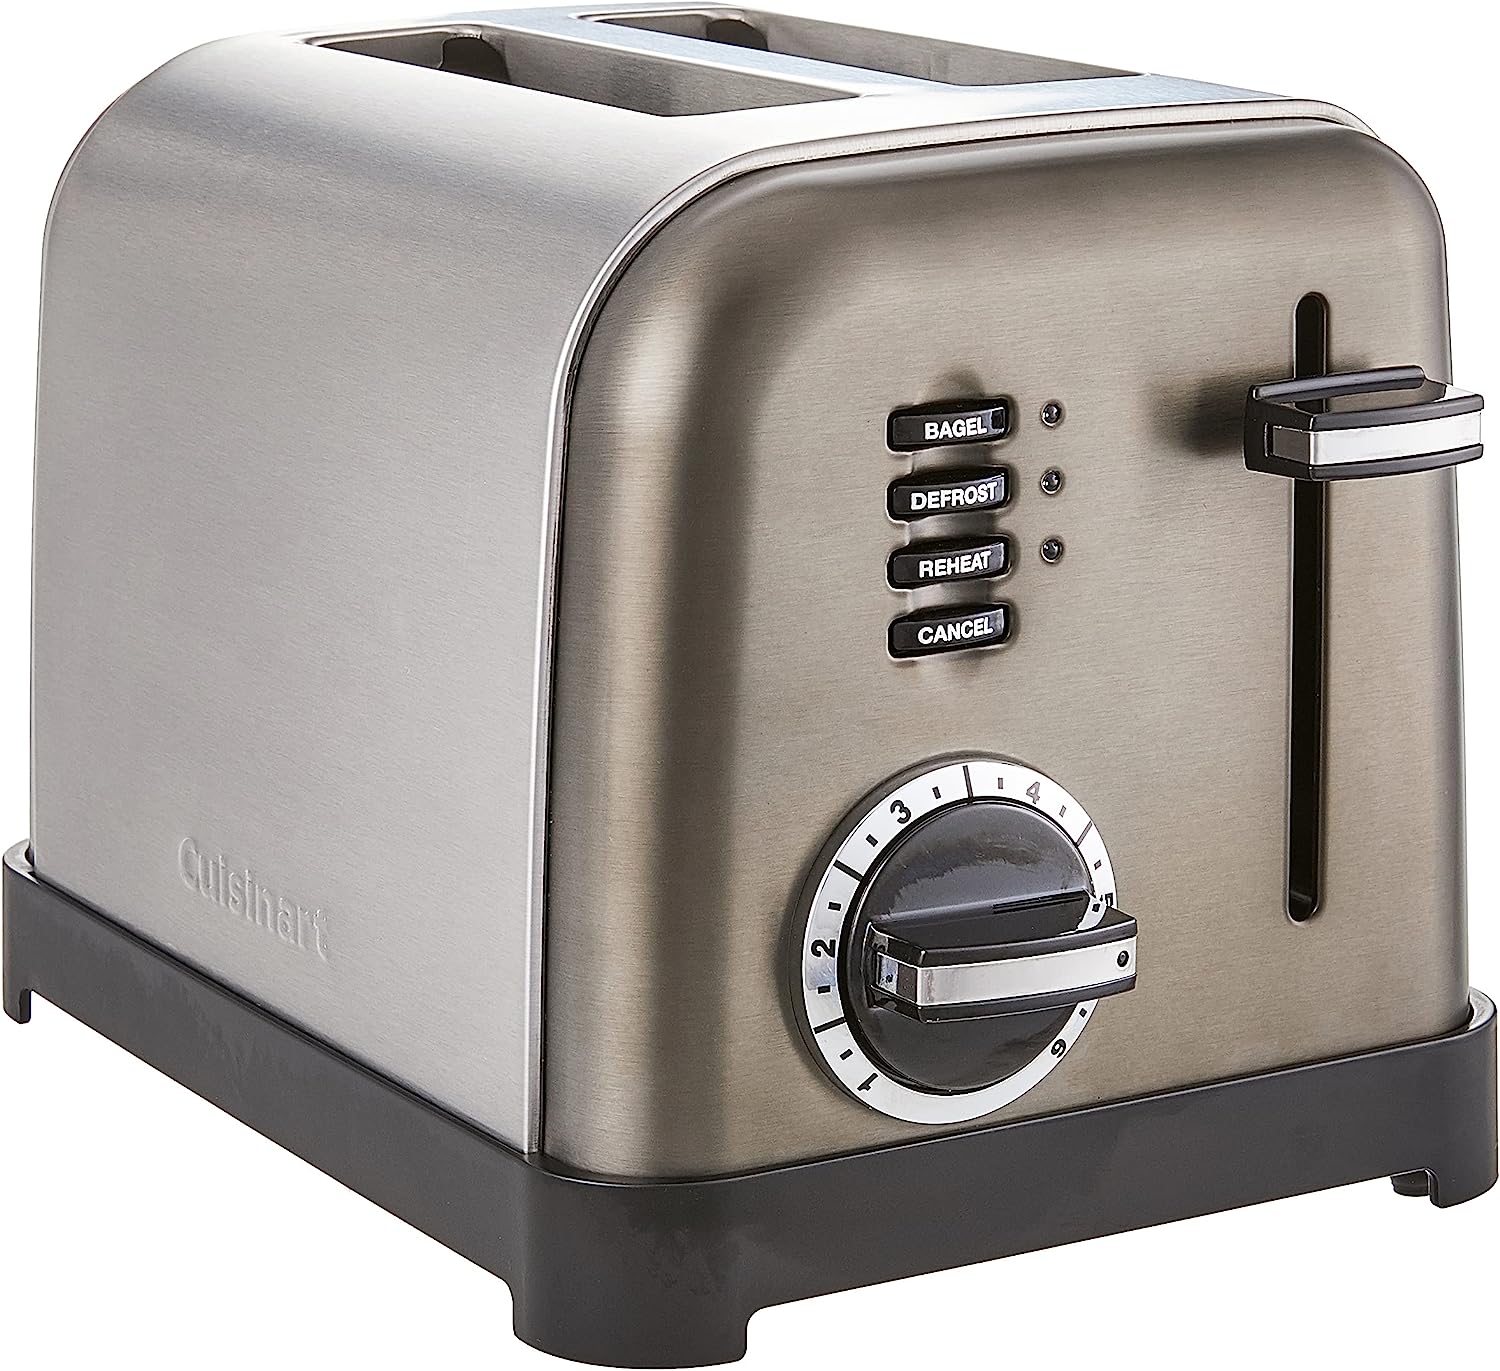 Cuisinart CPT-160BKS 2-Slice Metal Classic Toaster, Stainless Steel/Black - Certified Refurbished